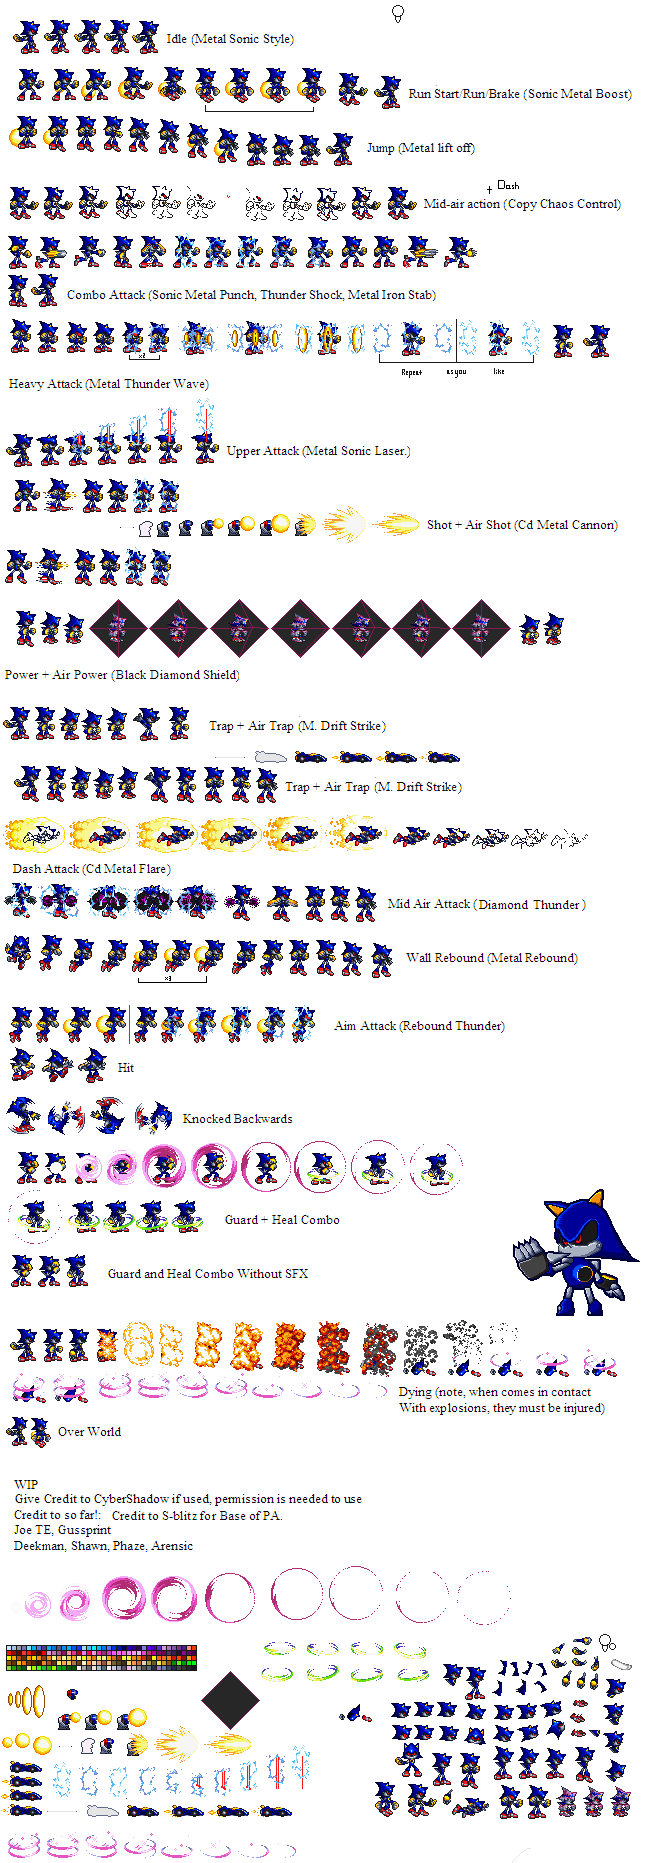 Sonic the Hedgehog Customs - Metal Sonic (Sonic Battle-Style)